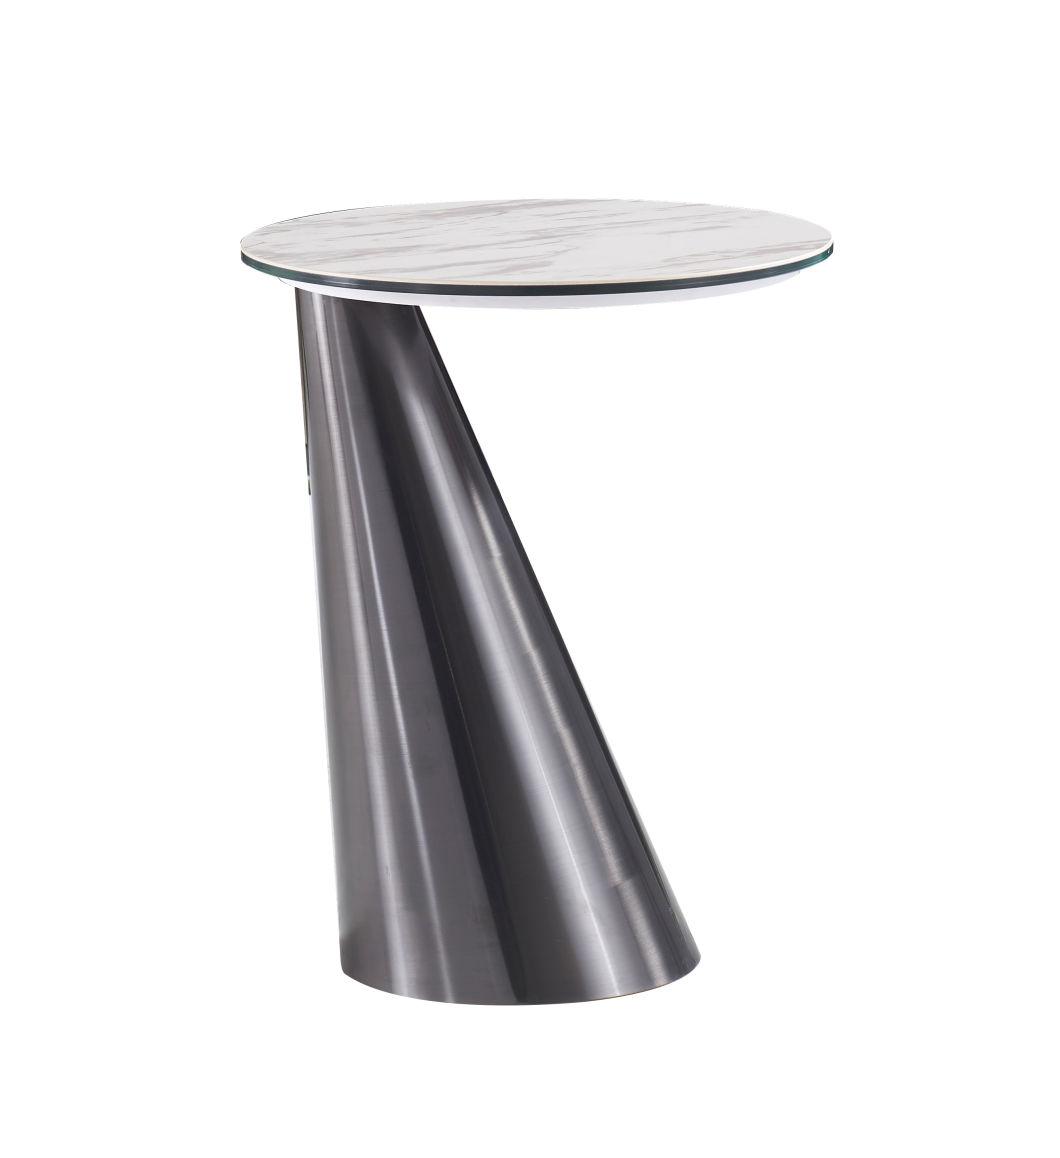 Ceramic Coffee Table /Side Table /Home Furniture /Hotel Furniture /Modern Furniture